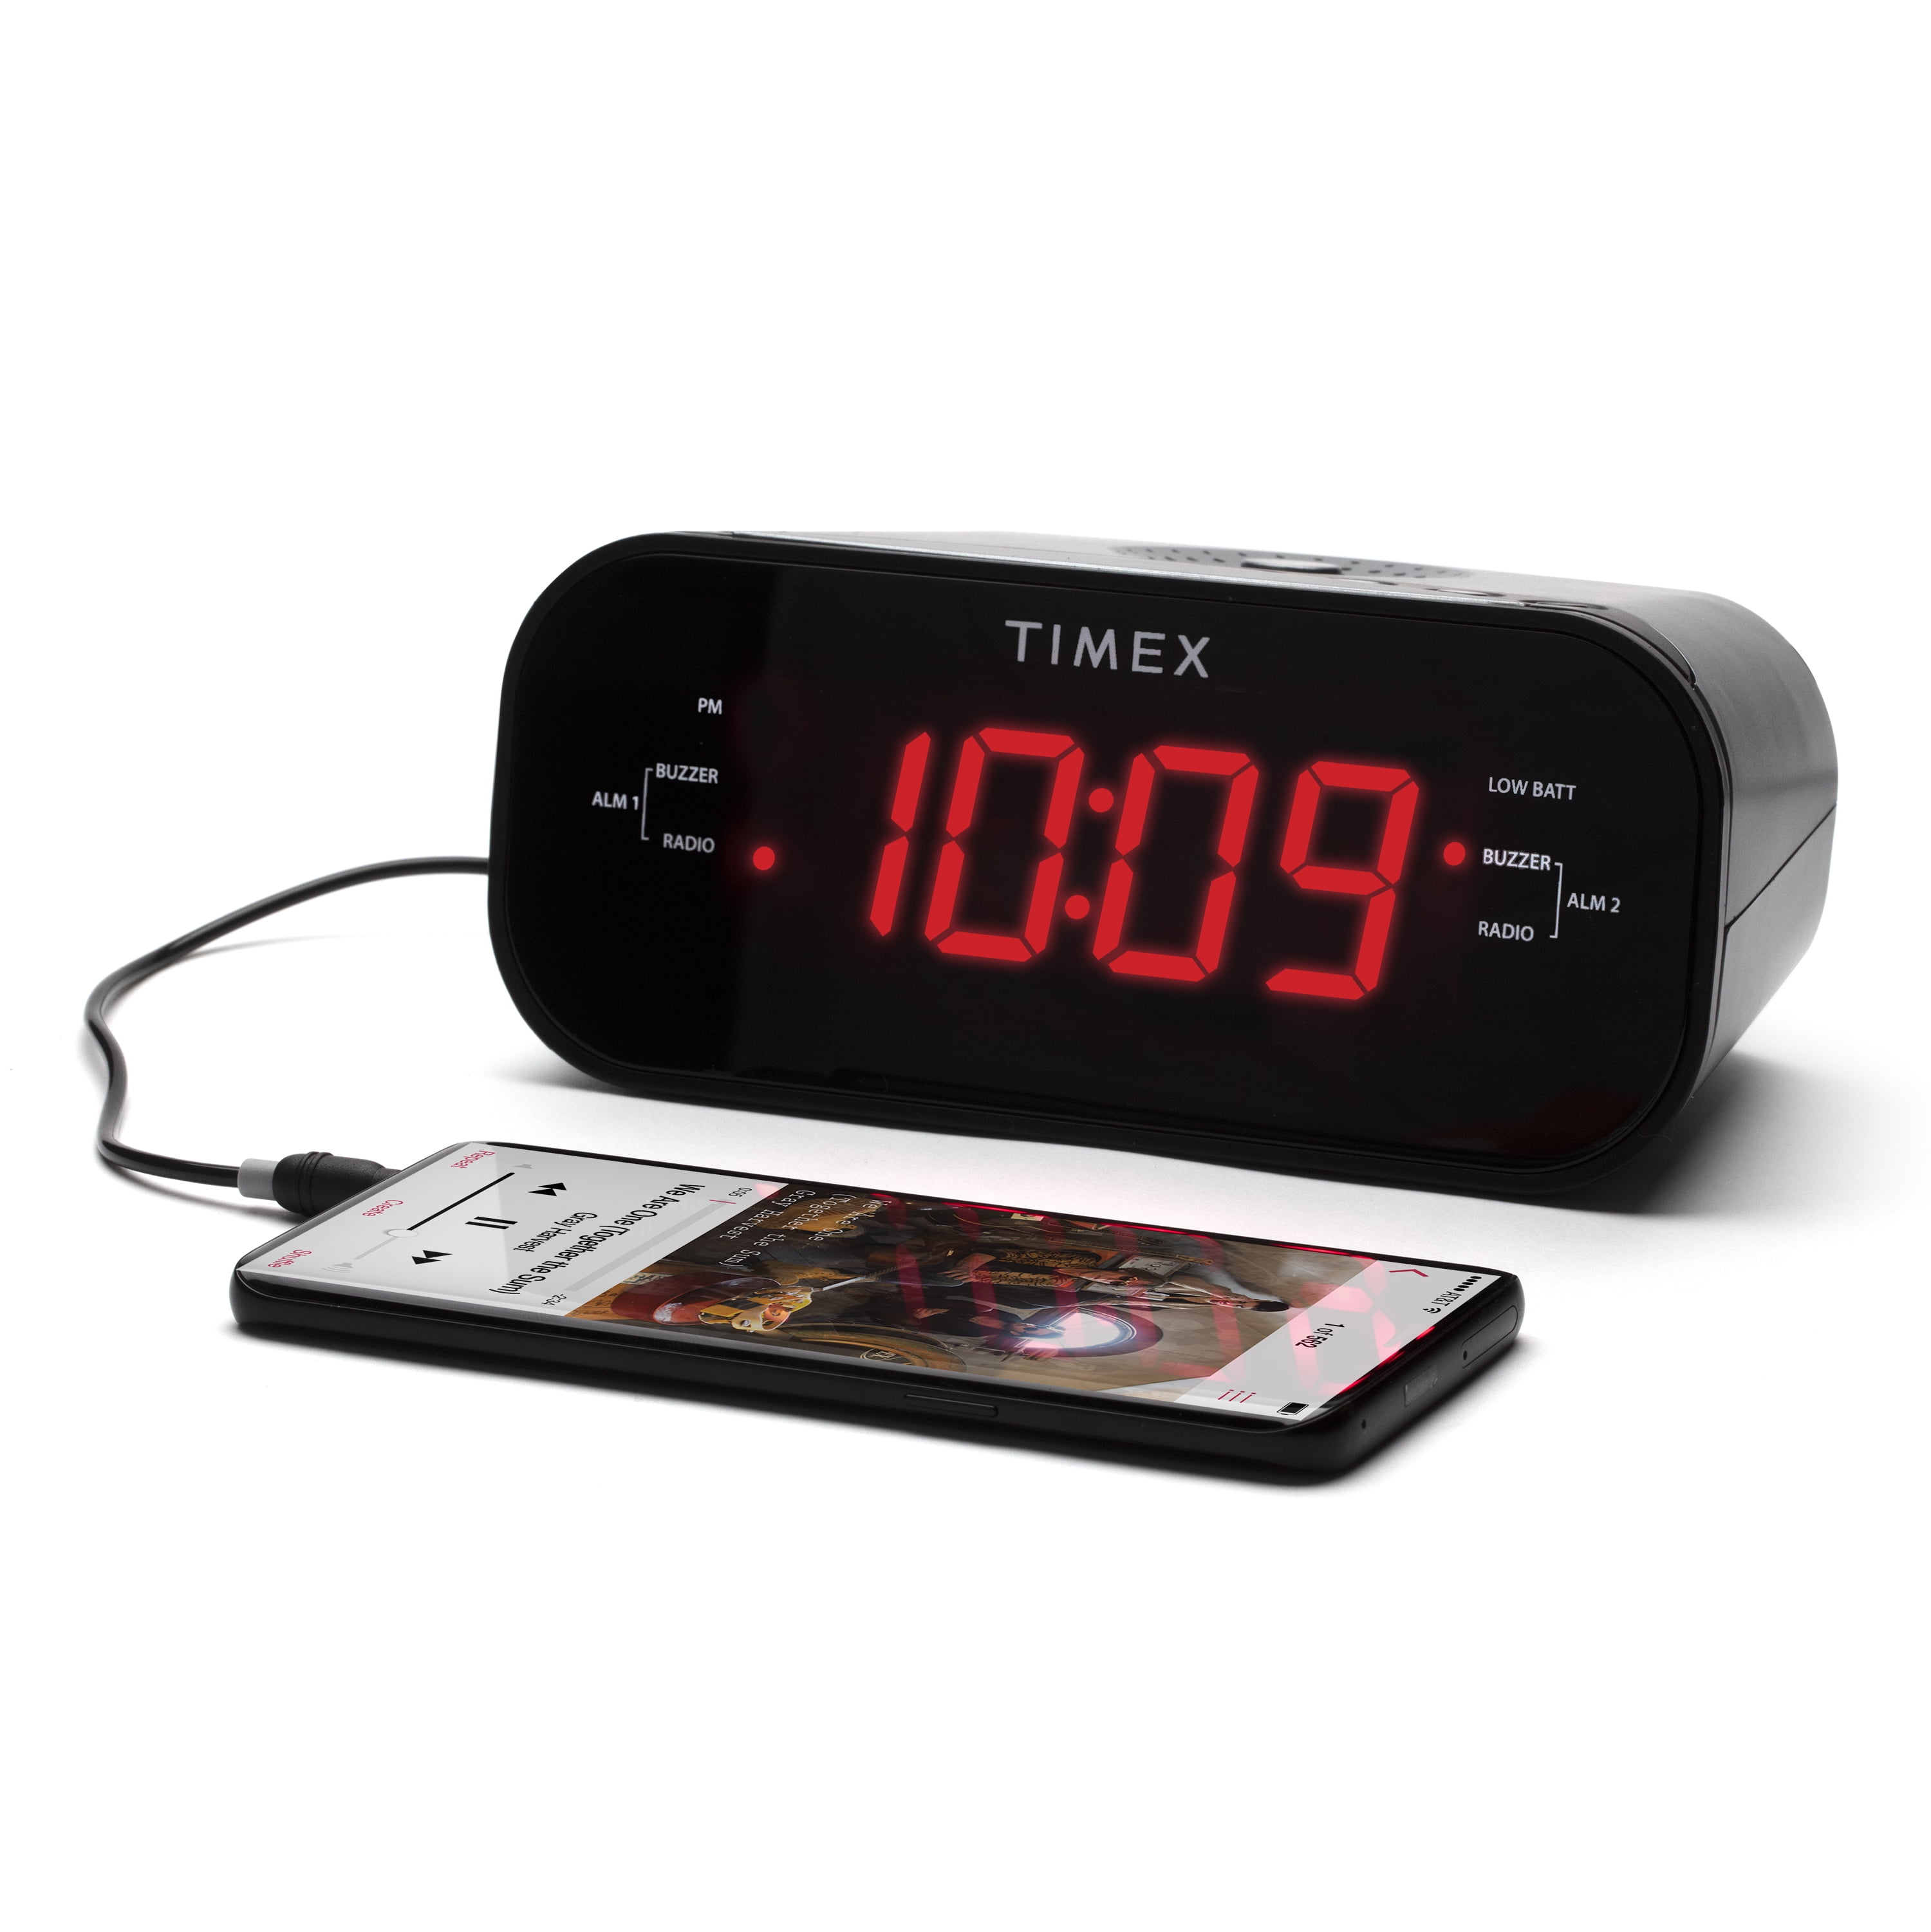 SmartSet Alarm Clock Radio with AM/FM Radio Dimmer Sleep Timer and 9" LED Displa 